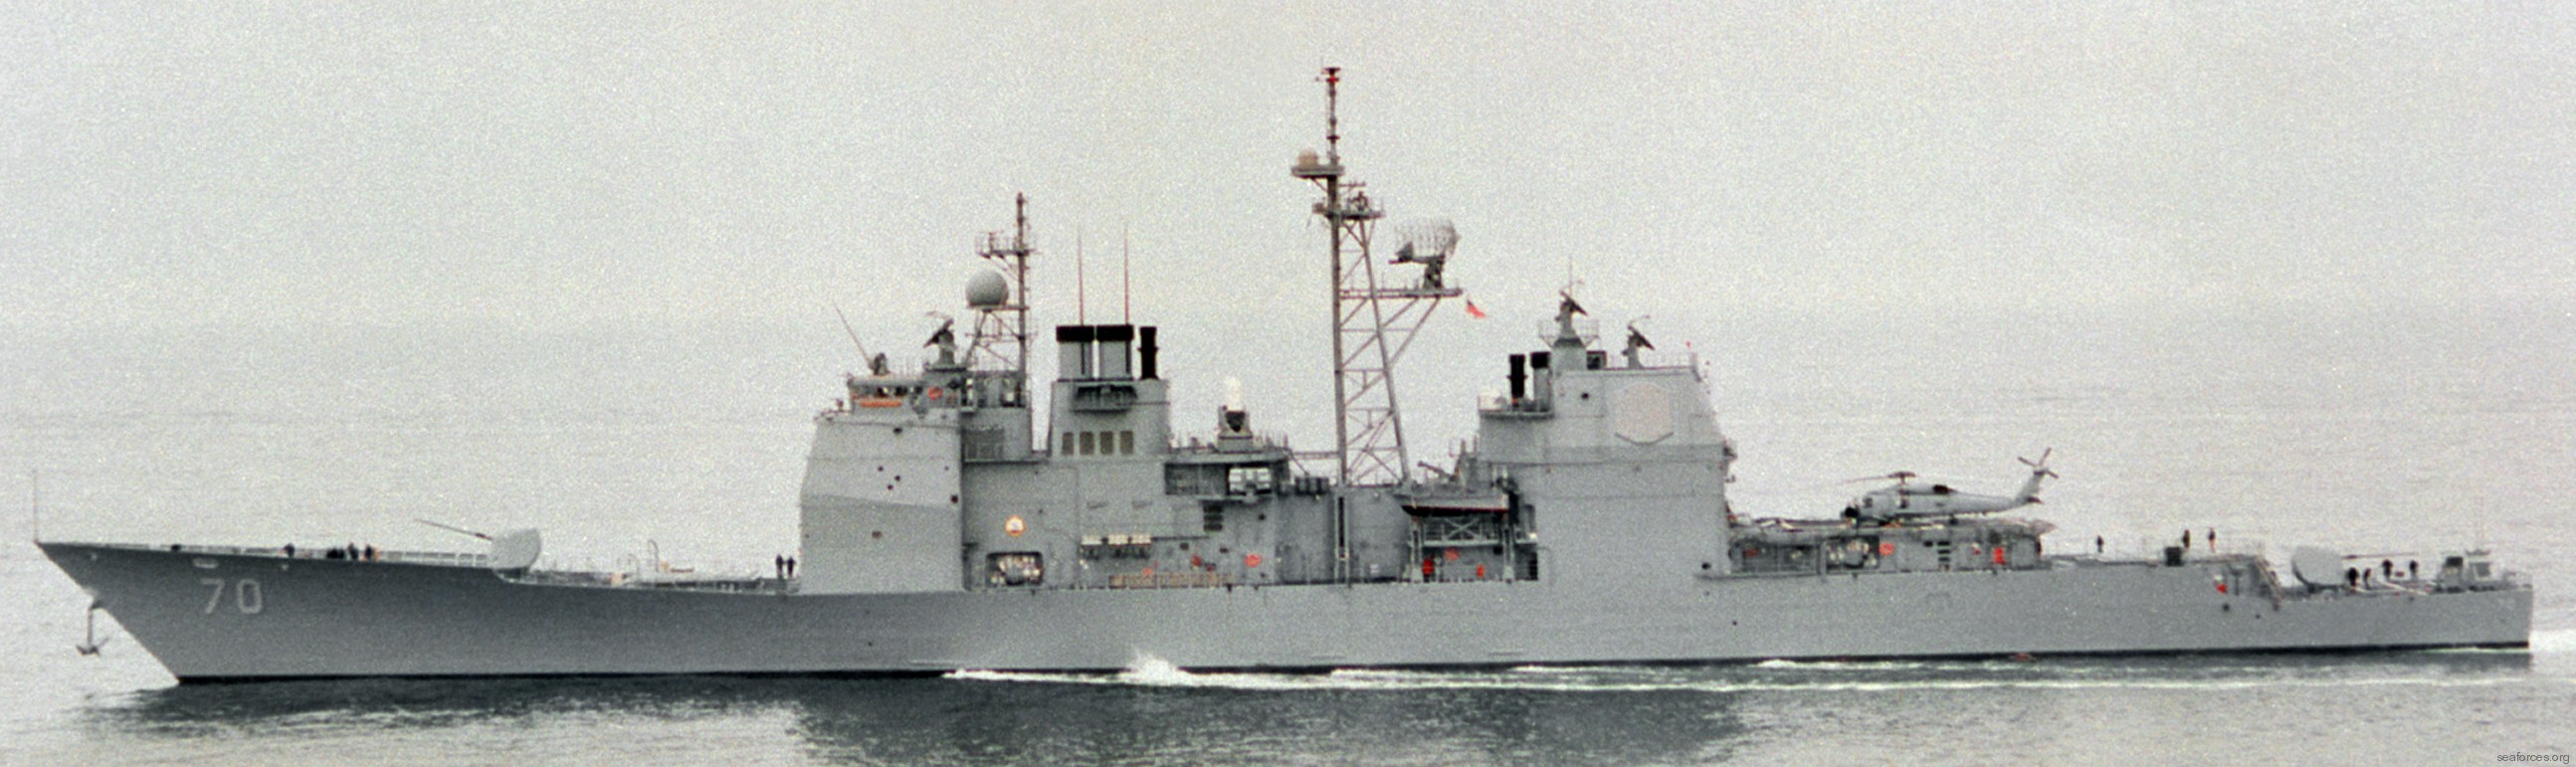 cg-70 uss lake erie ticonderoga class guided missile cruiser navy 84